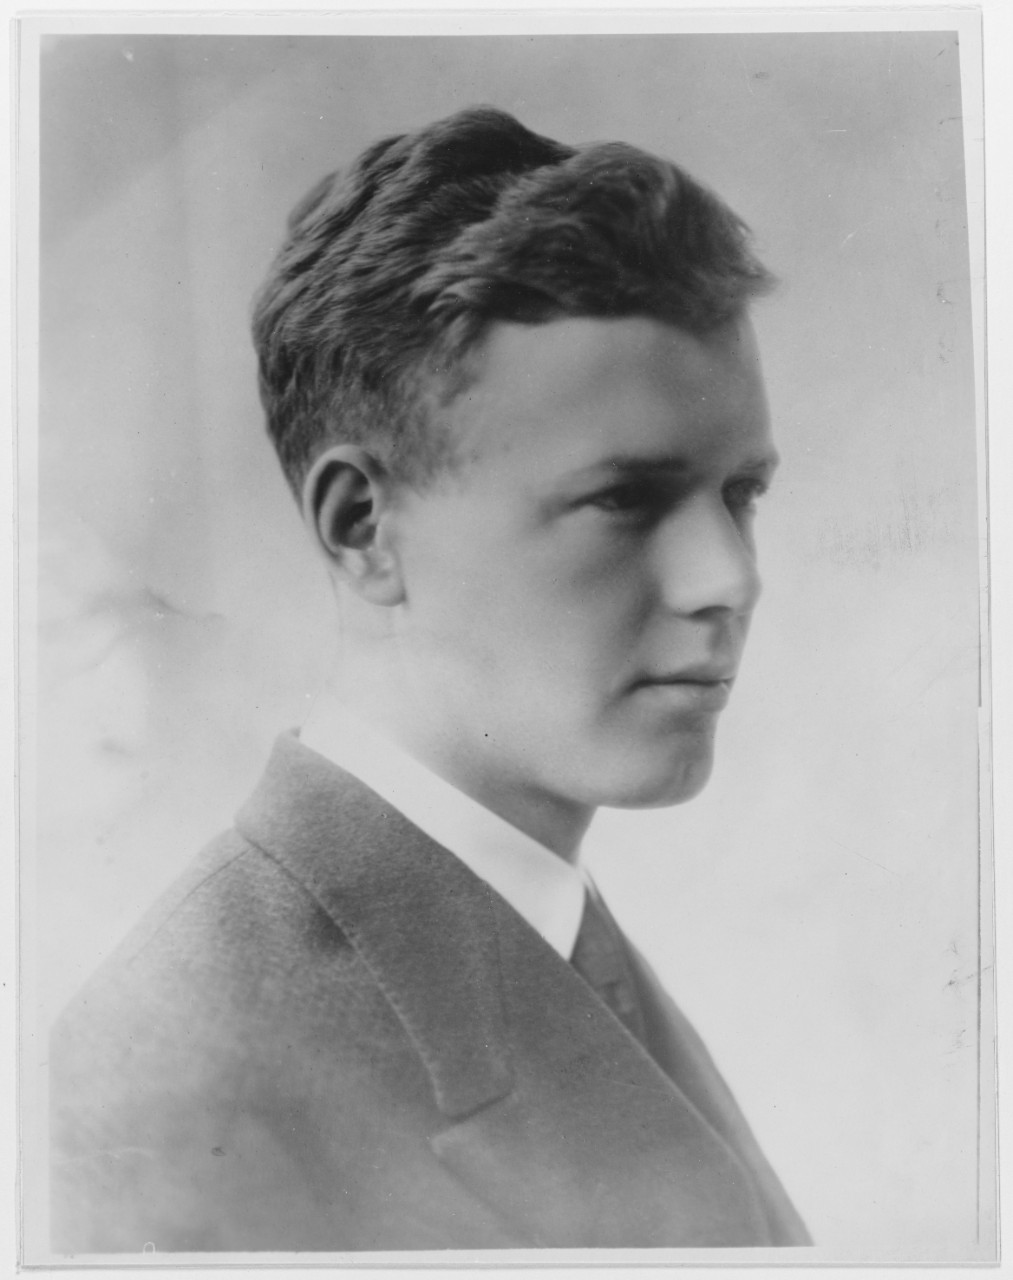 2nd Lieutenant Charles A. Lindbergh, USA Air Service Reserve